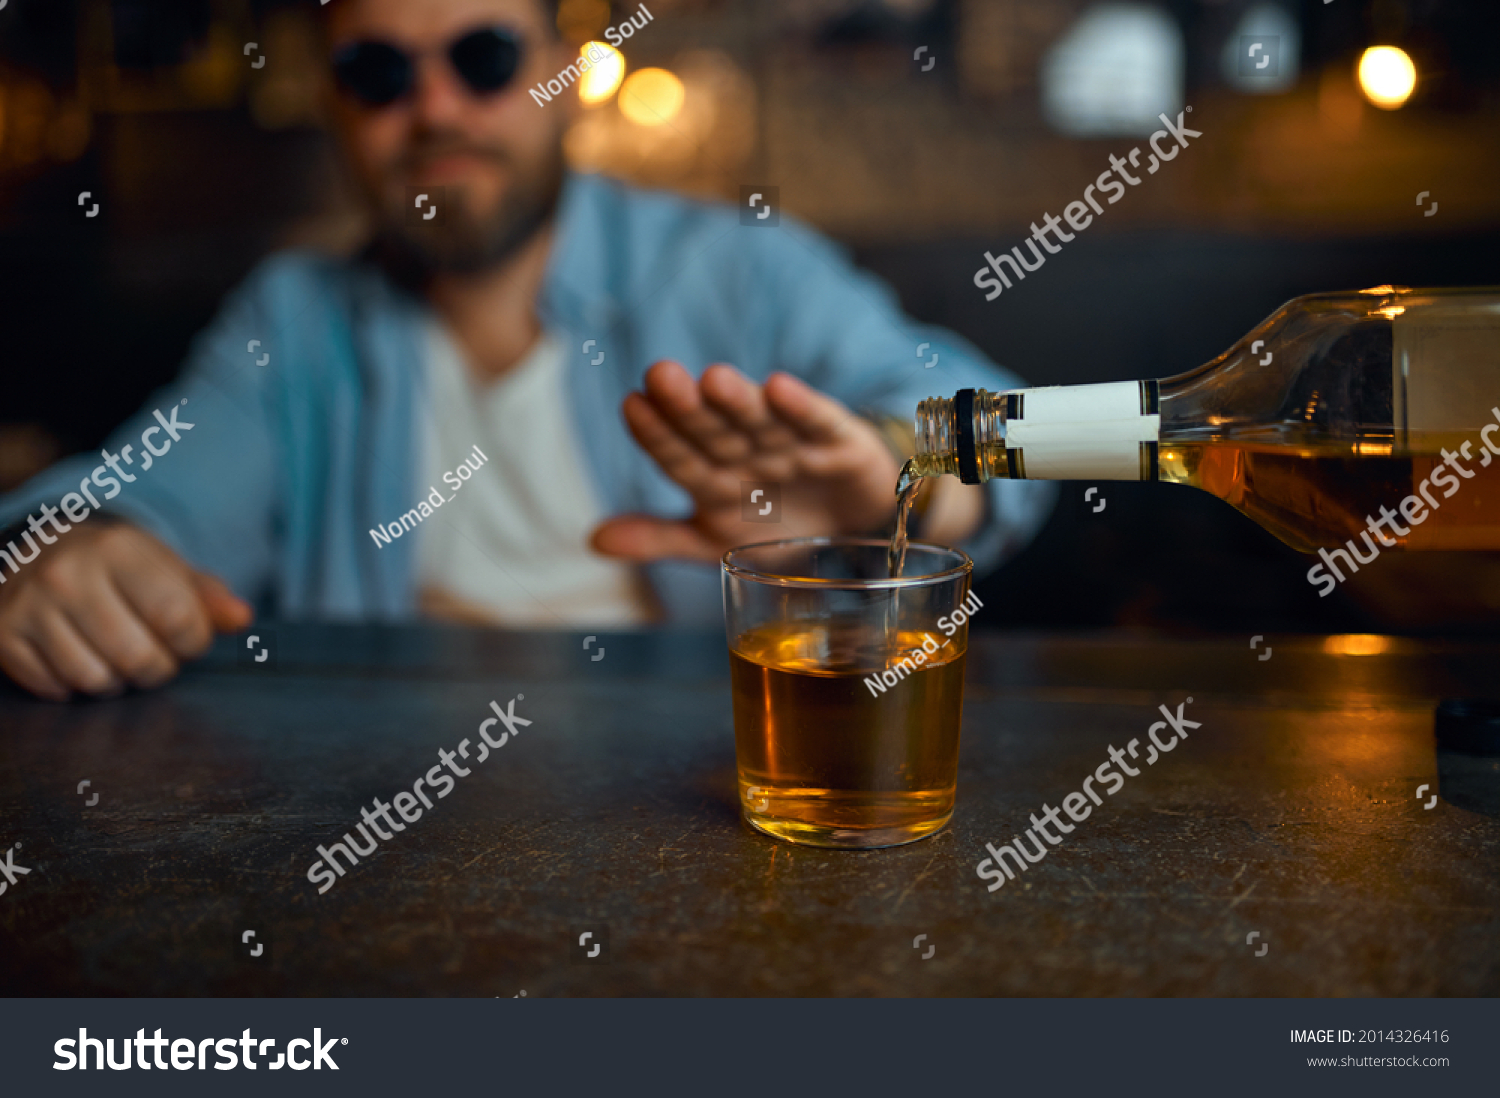 496 Temperance alcohol Images, Stock Photos & Vectors | Shutterstock